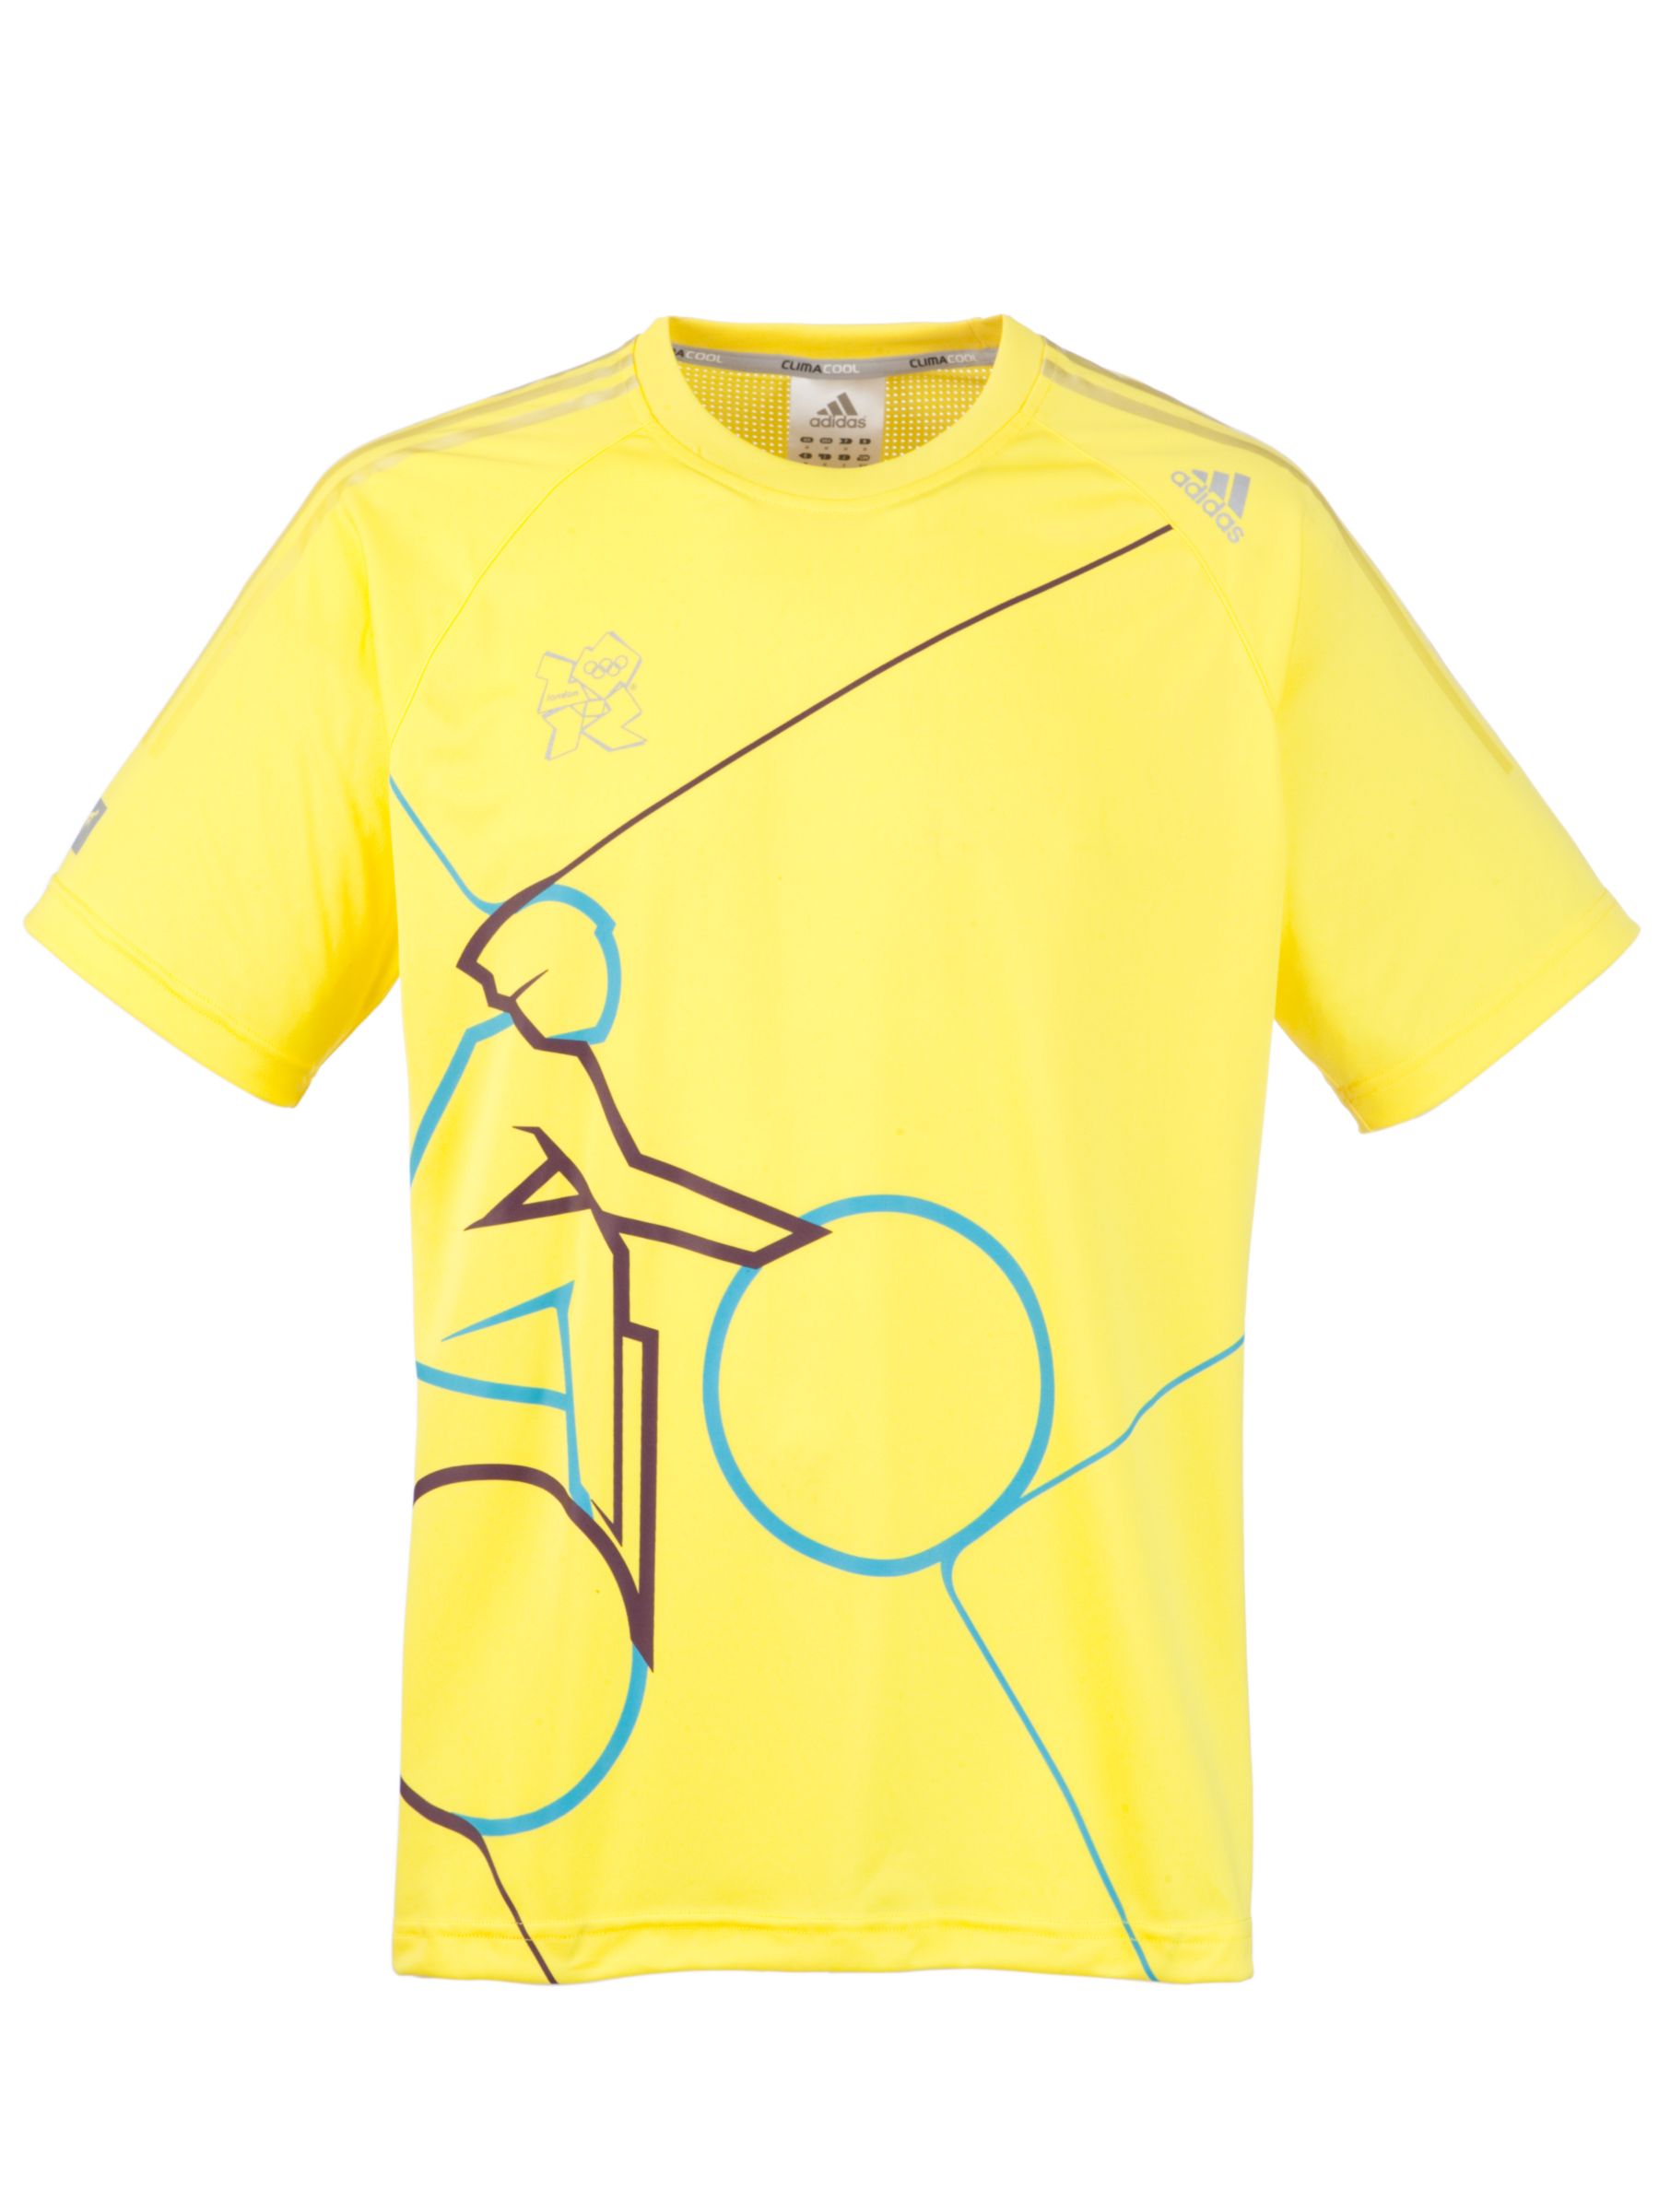 Team 2012 Cycling Graphic Print T-Shirt,